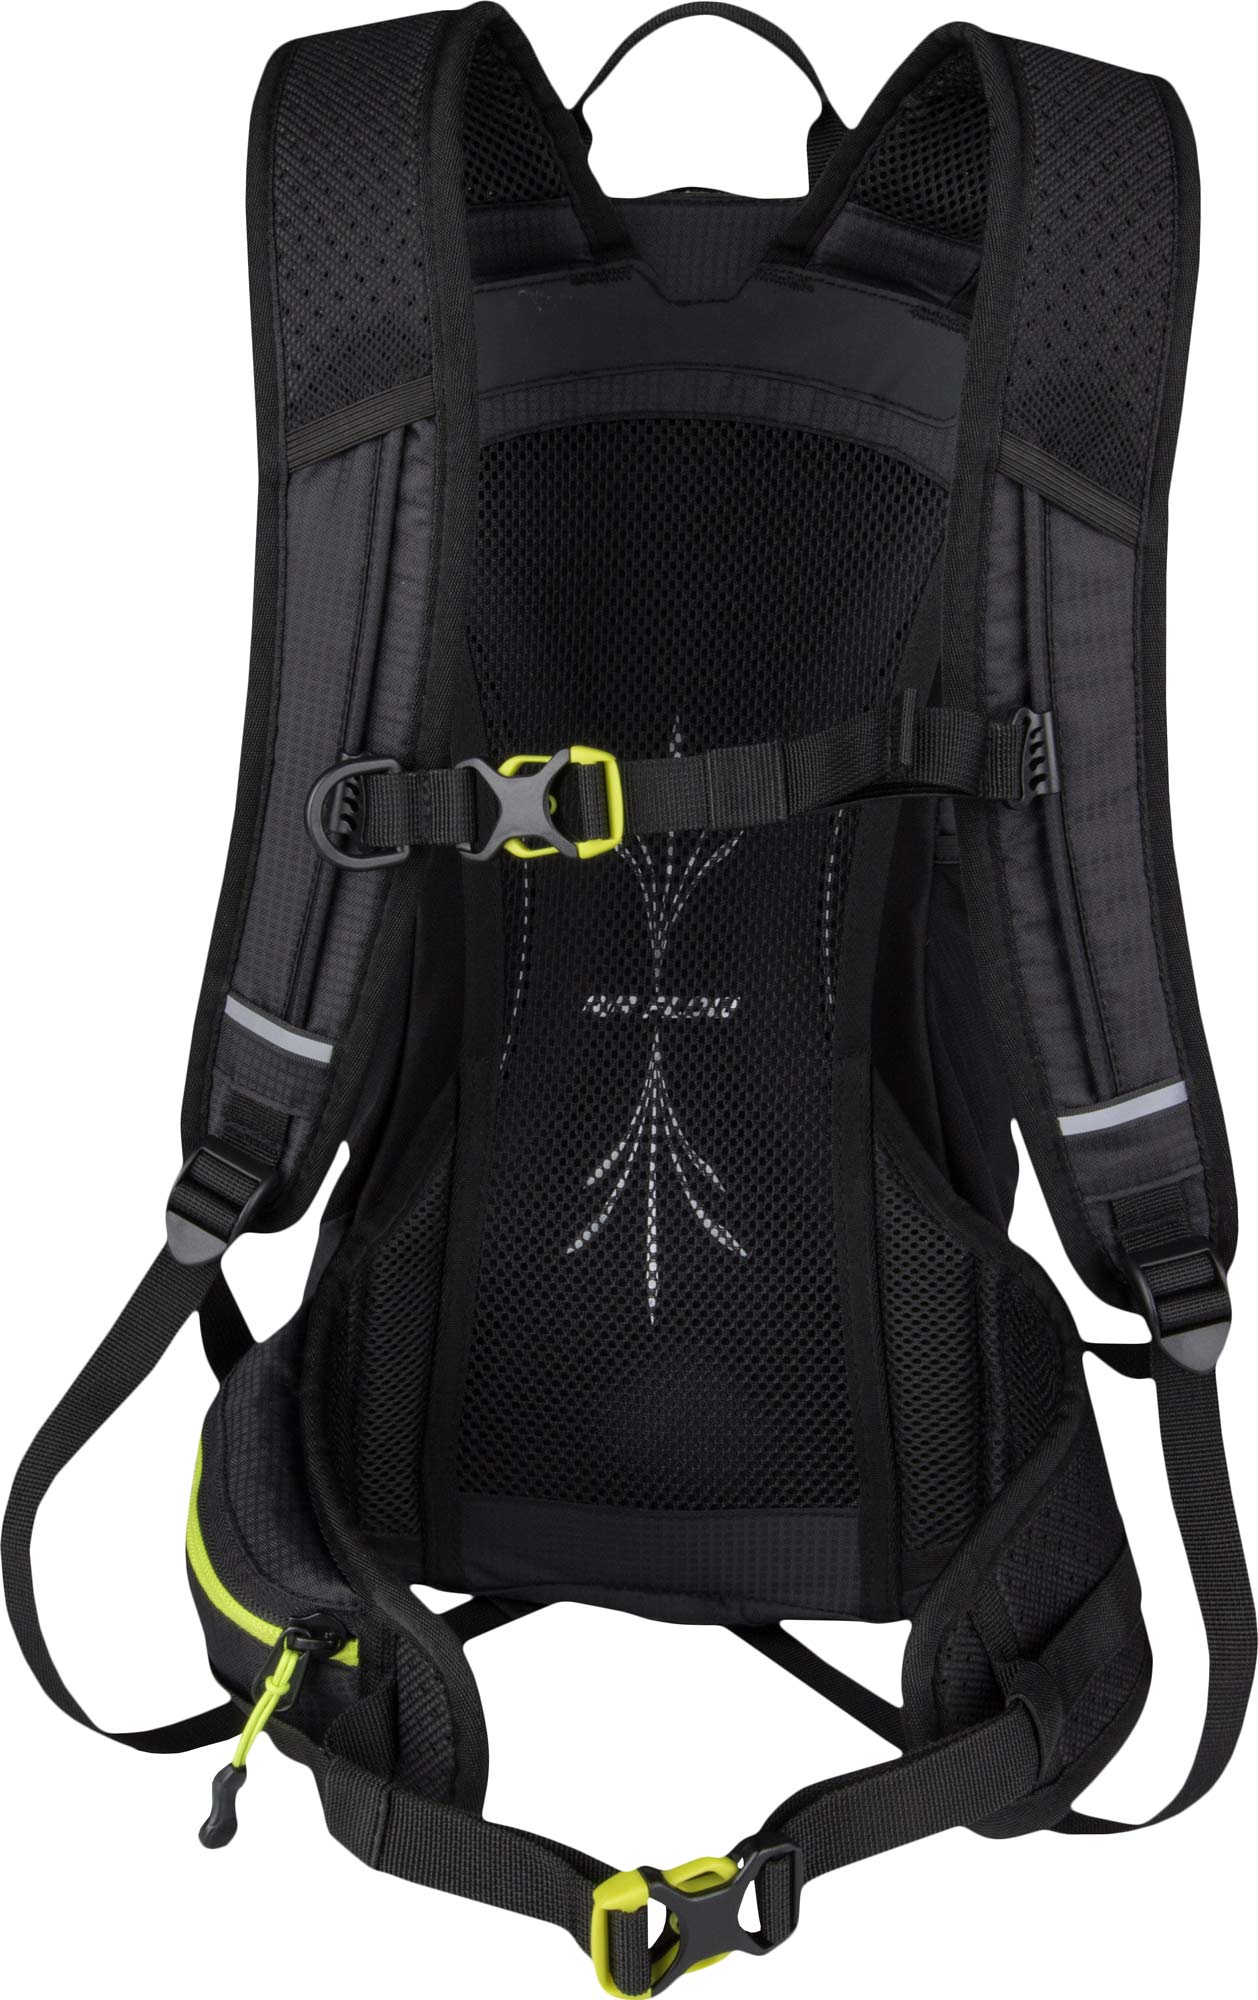 Cycling-hiking backpack